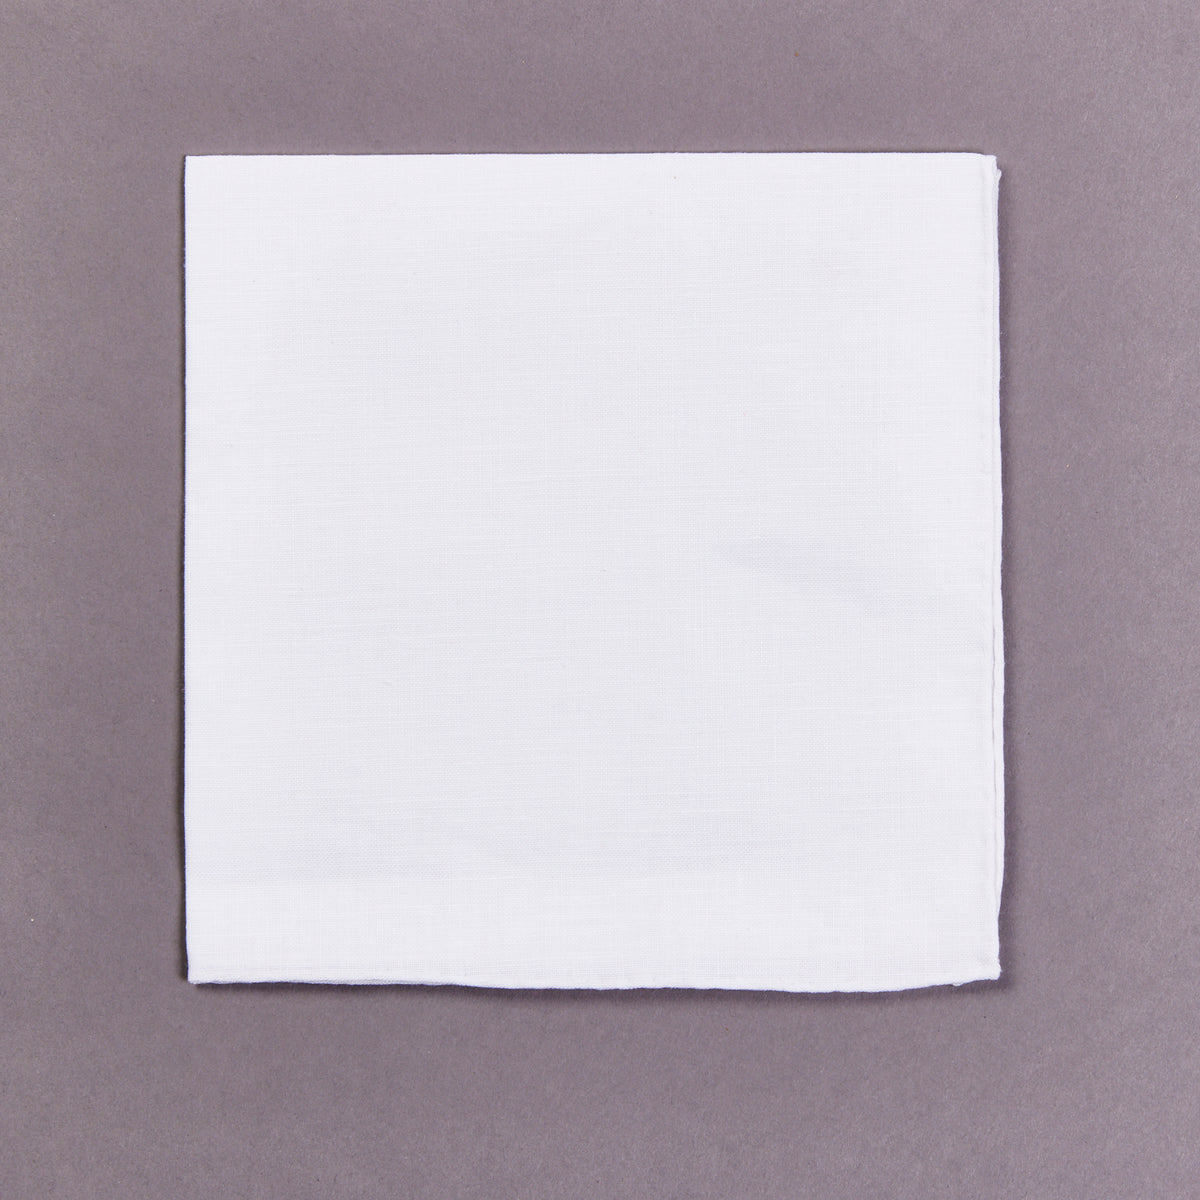 A Simonnot Godard 100% Linen Plain White Pocket Square on a gray background.